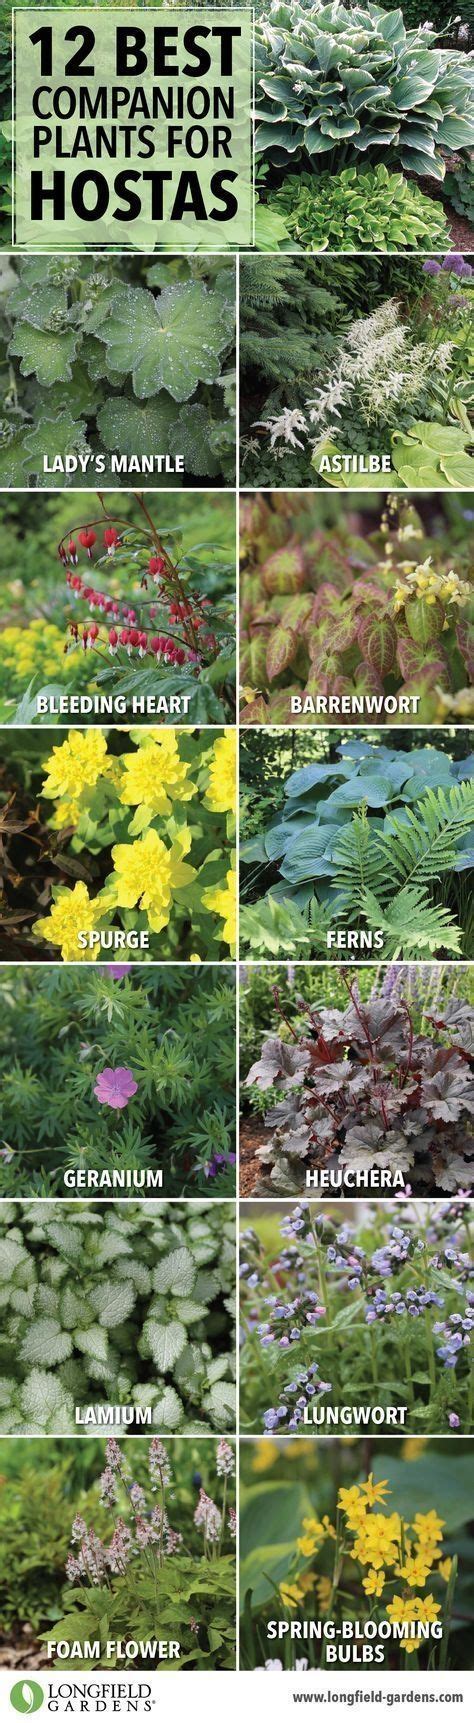 12 Best Companion Plants For Hostas Shade Plants Longfield Gardens